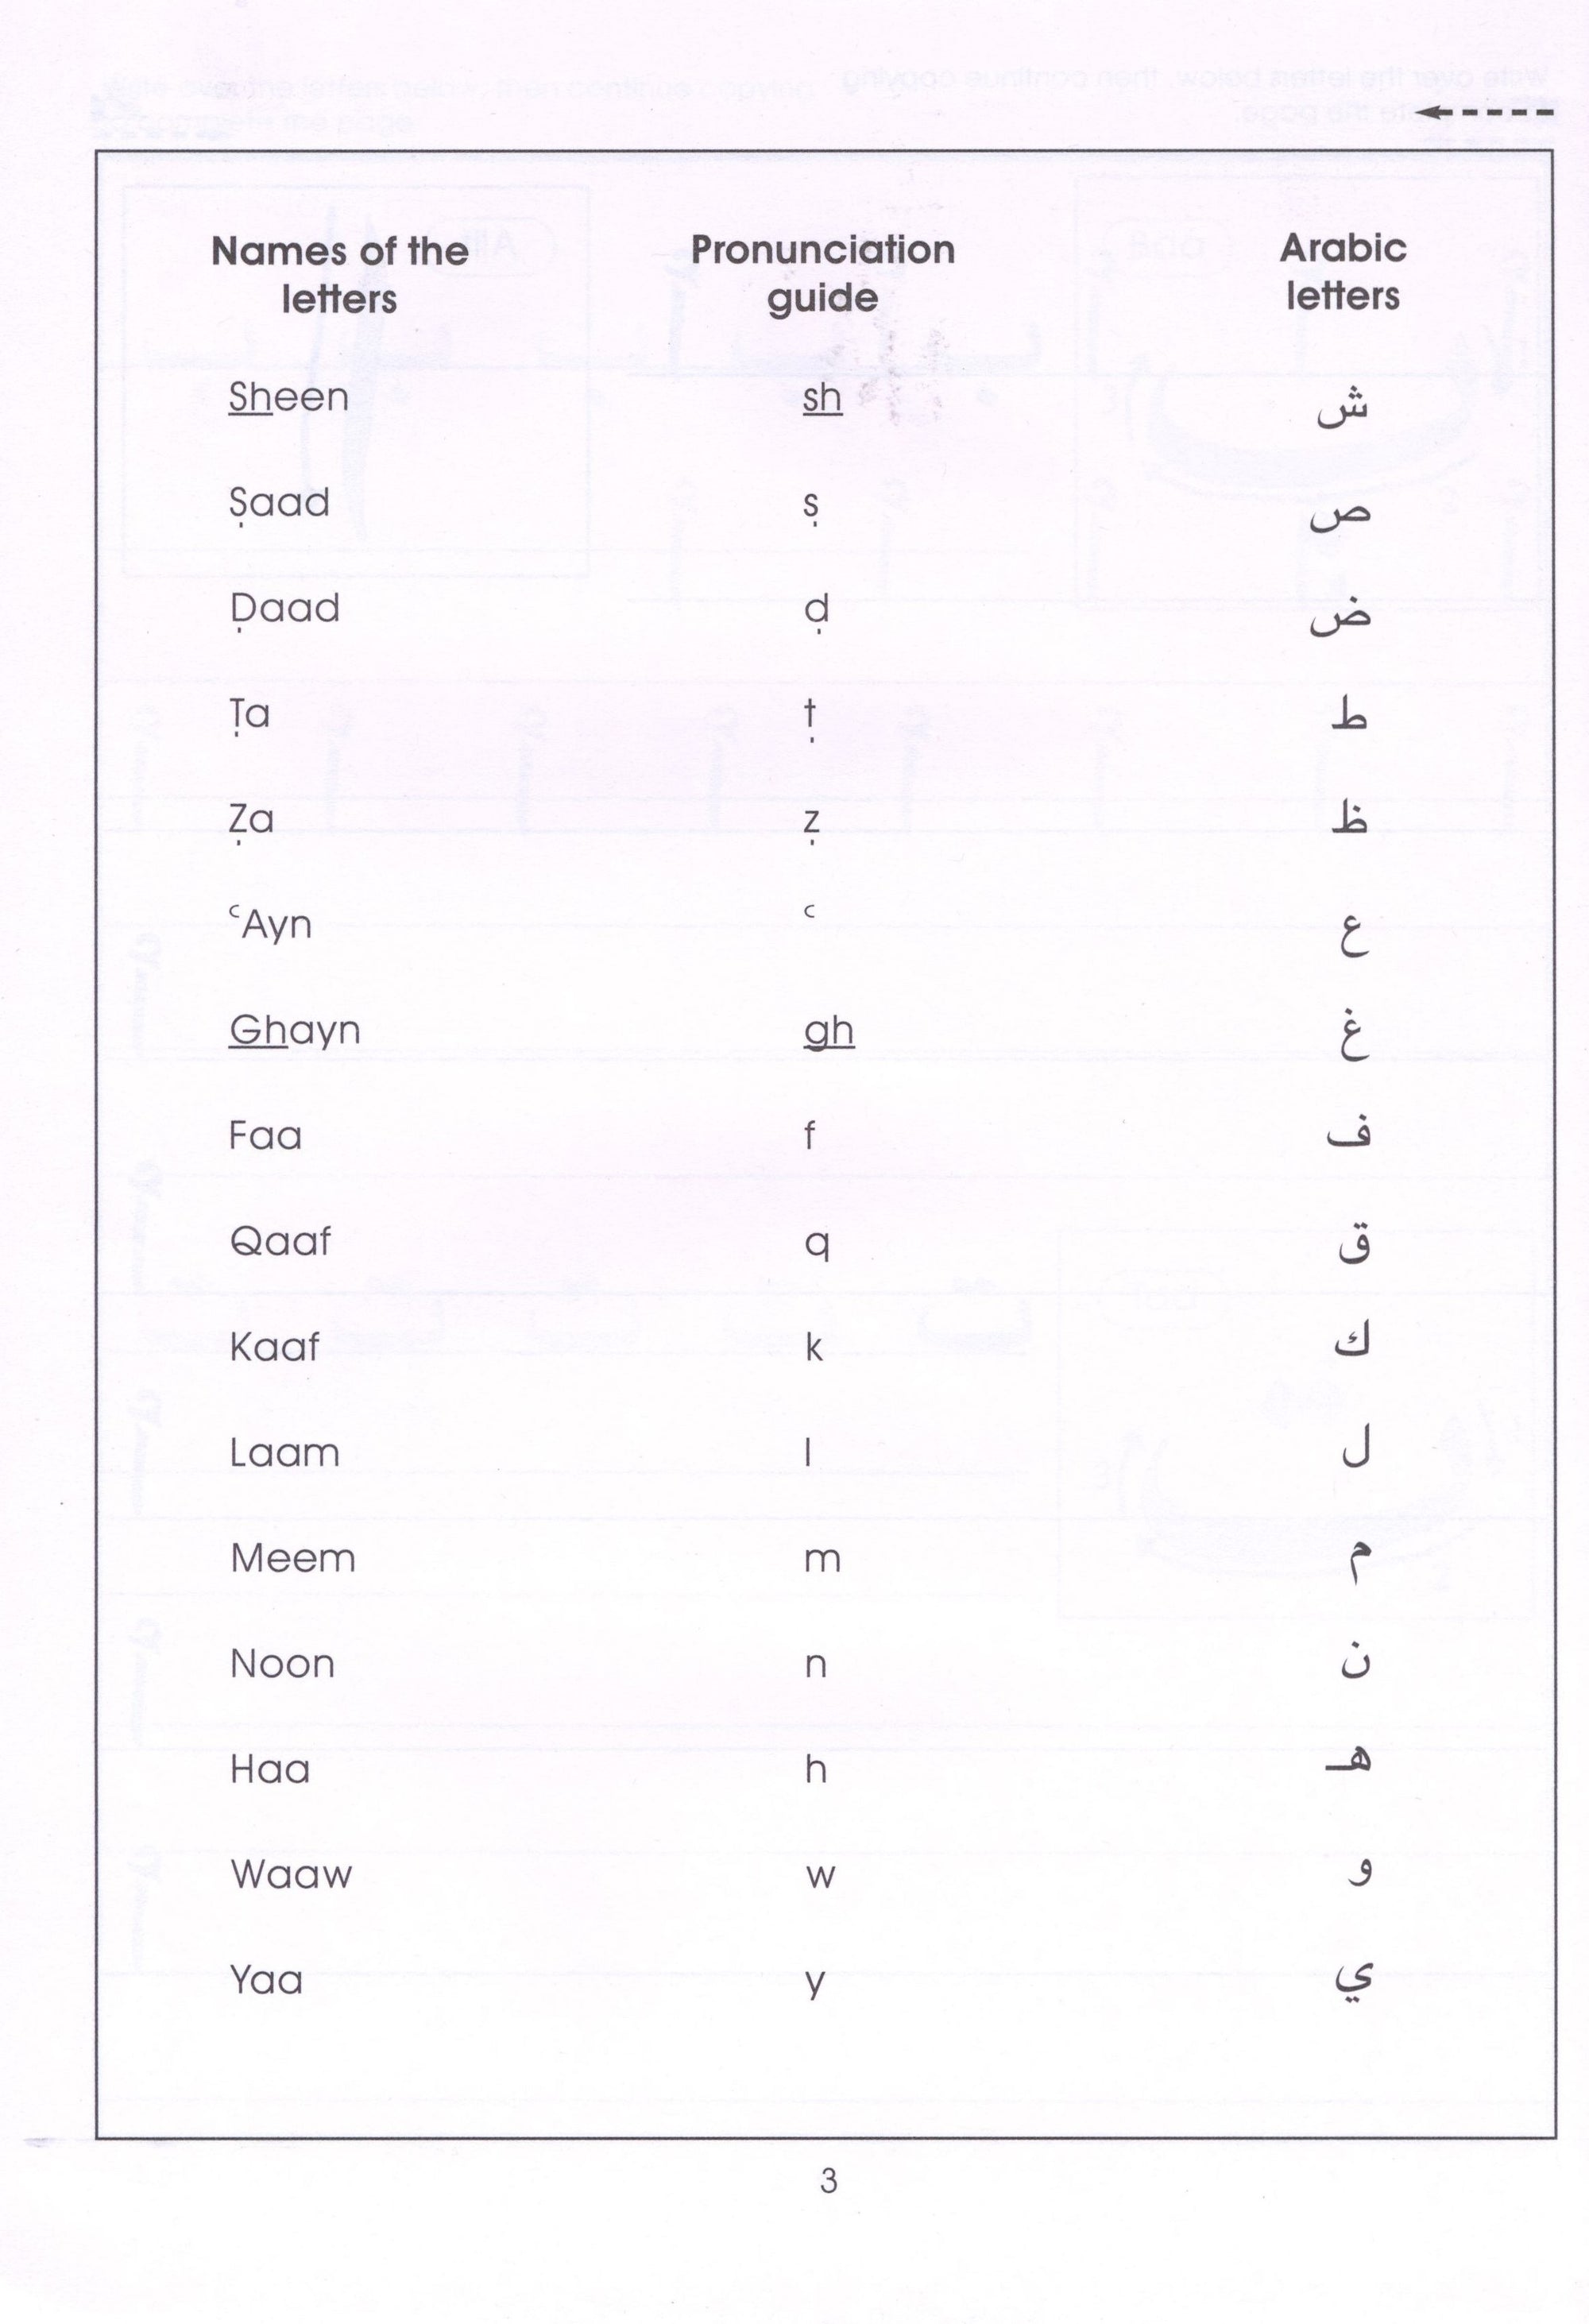 Gateway to Arabic Book 1 مفتاح العربية